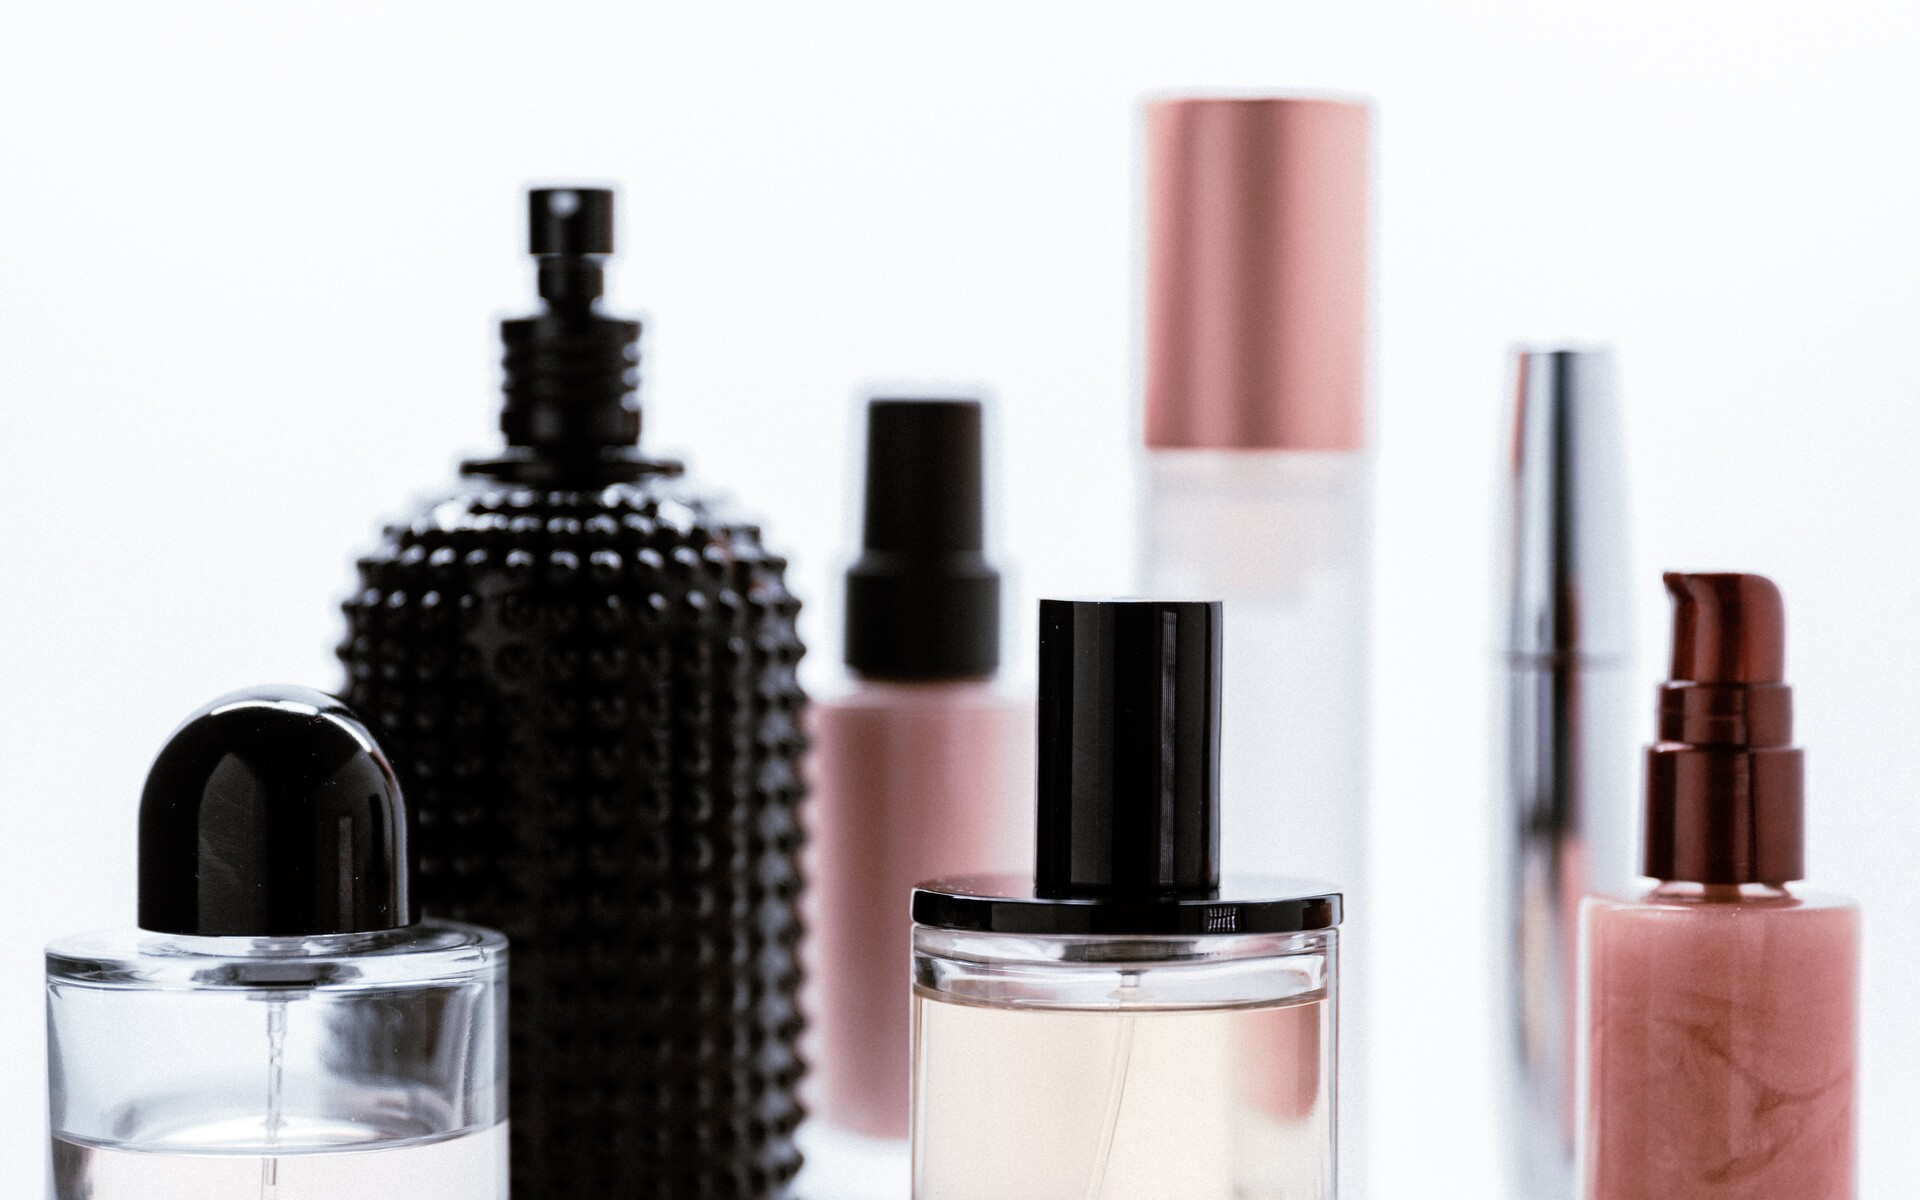 Six perfume products